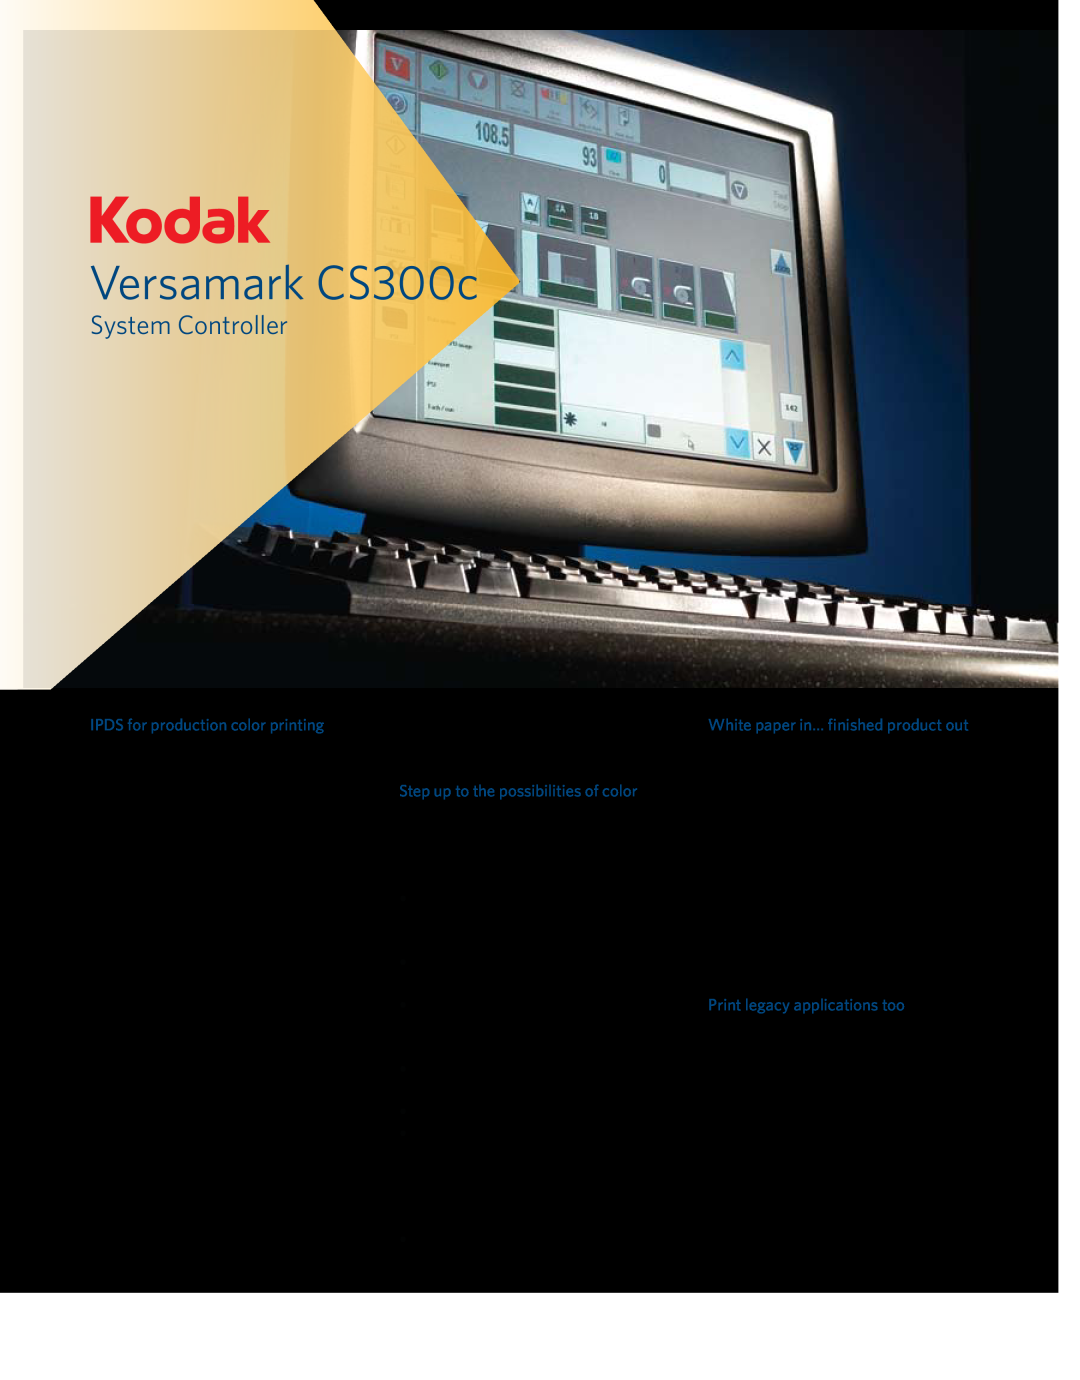 Kodak CS300C manual Versamark CS300c, System Controller, IPDS for production color printing, Print legacy applications too 